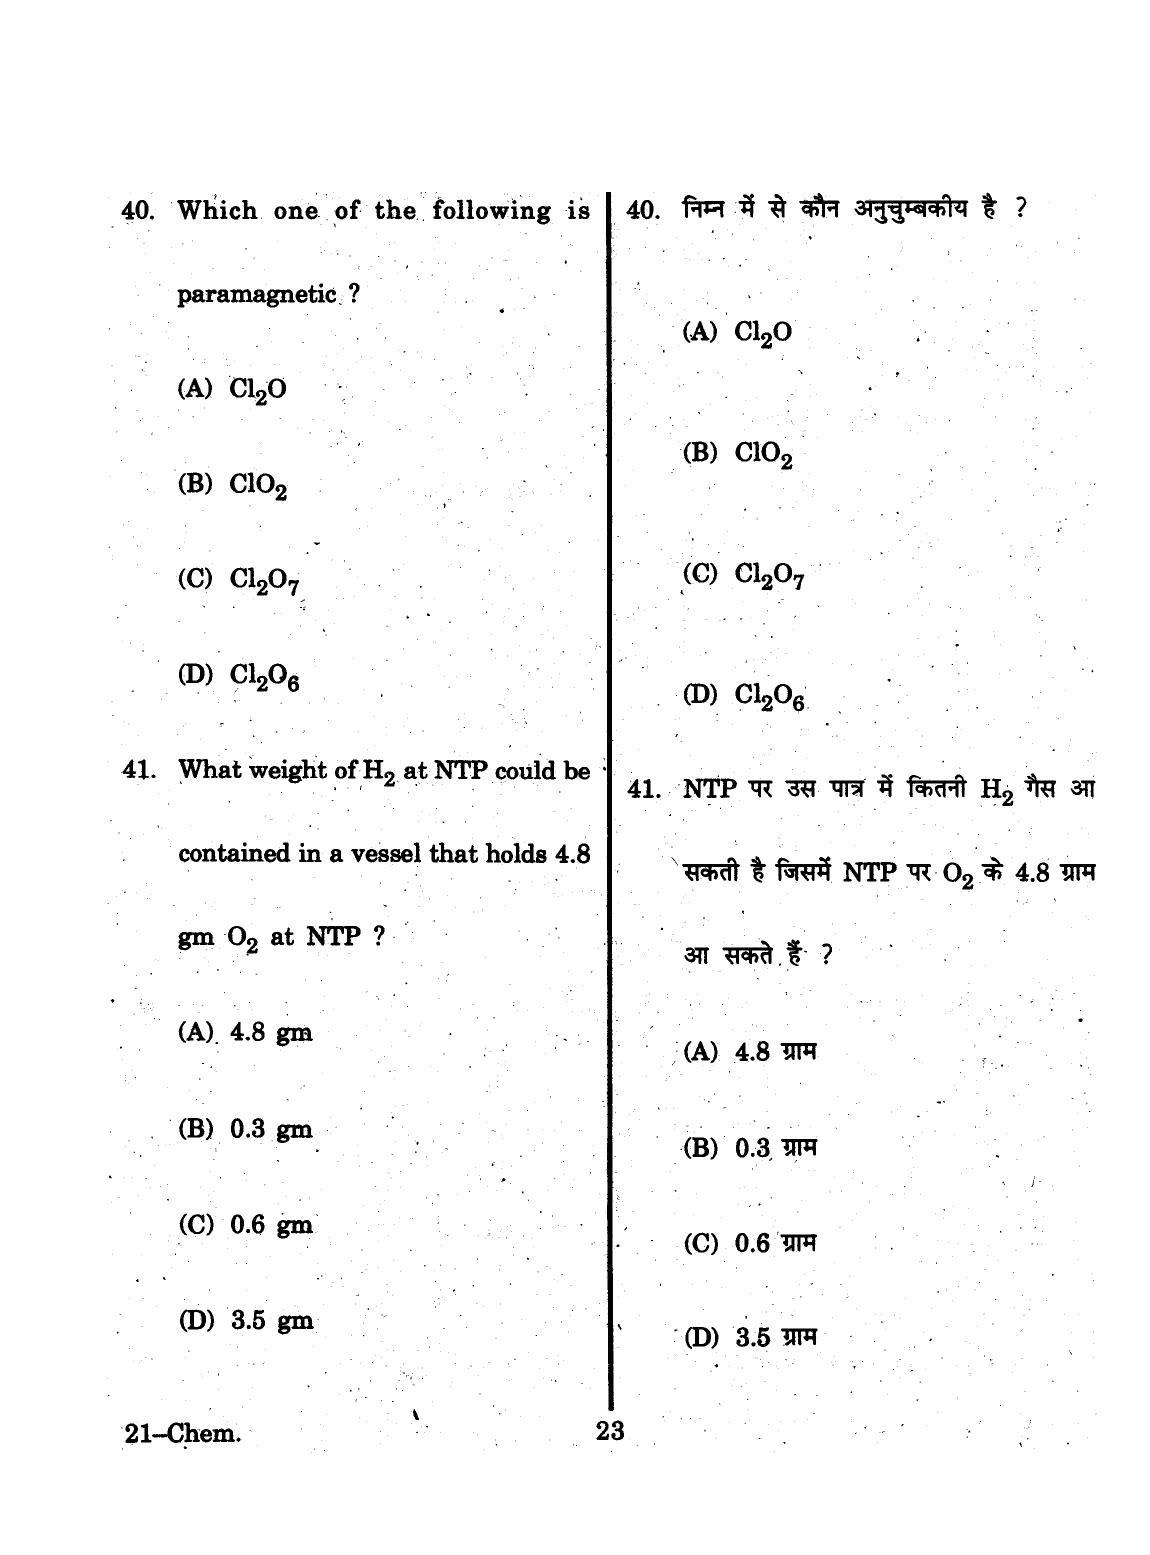 URATPG 2015 Chemisty Question Paper - Page 23